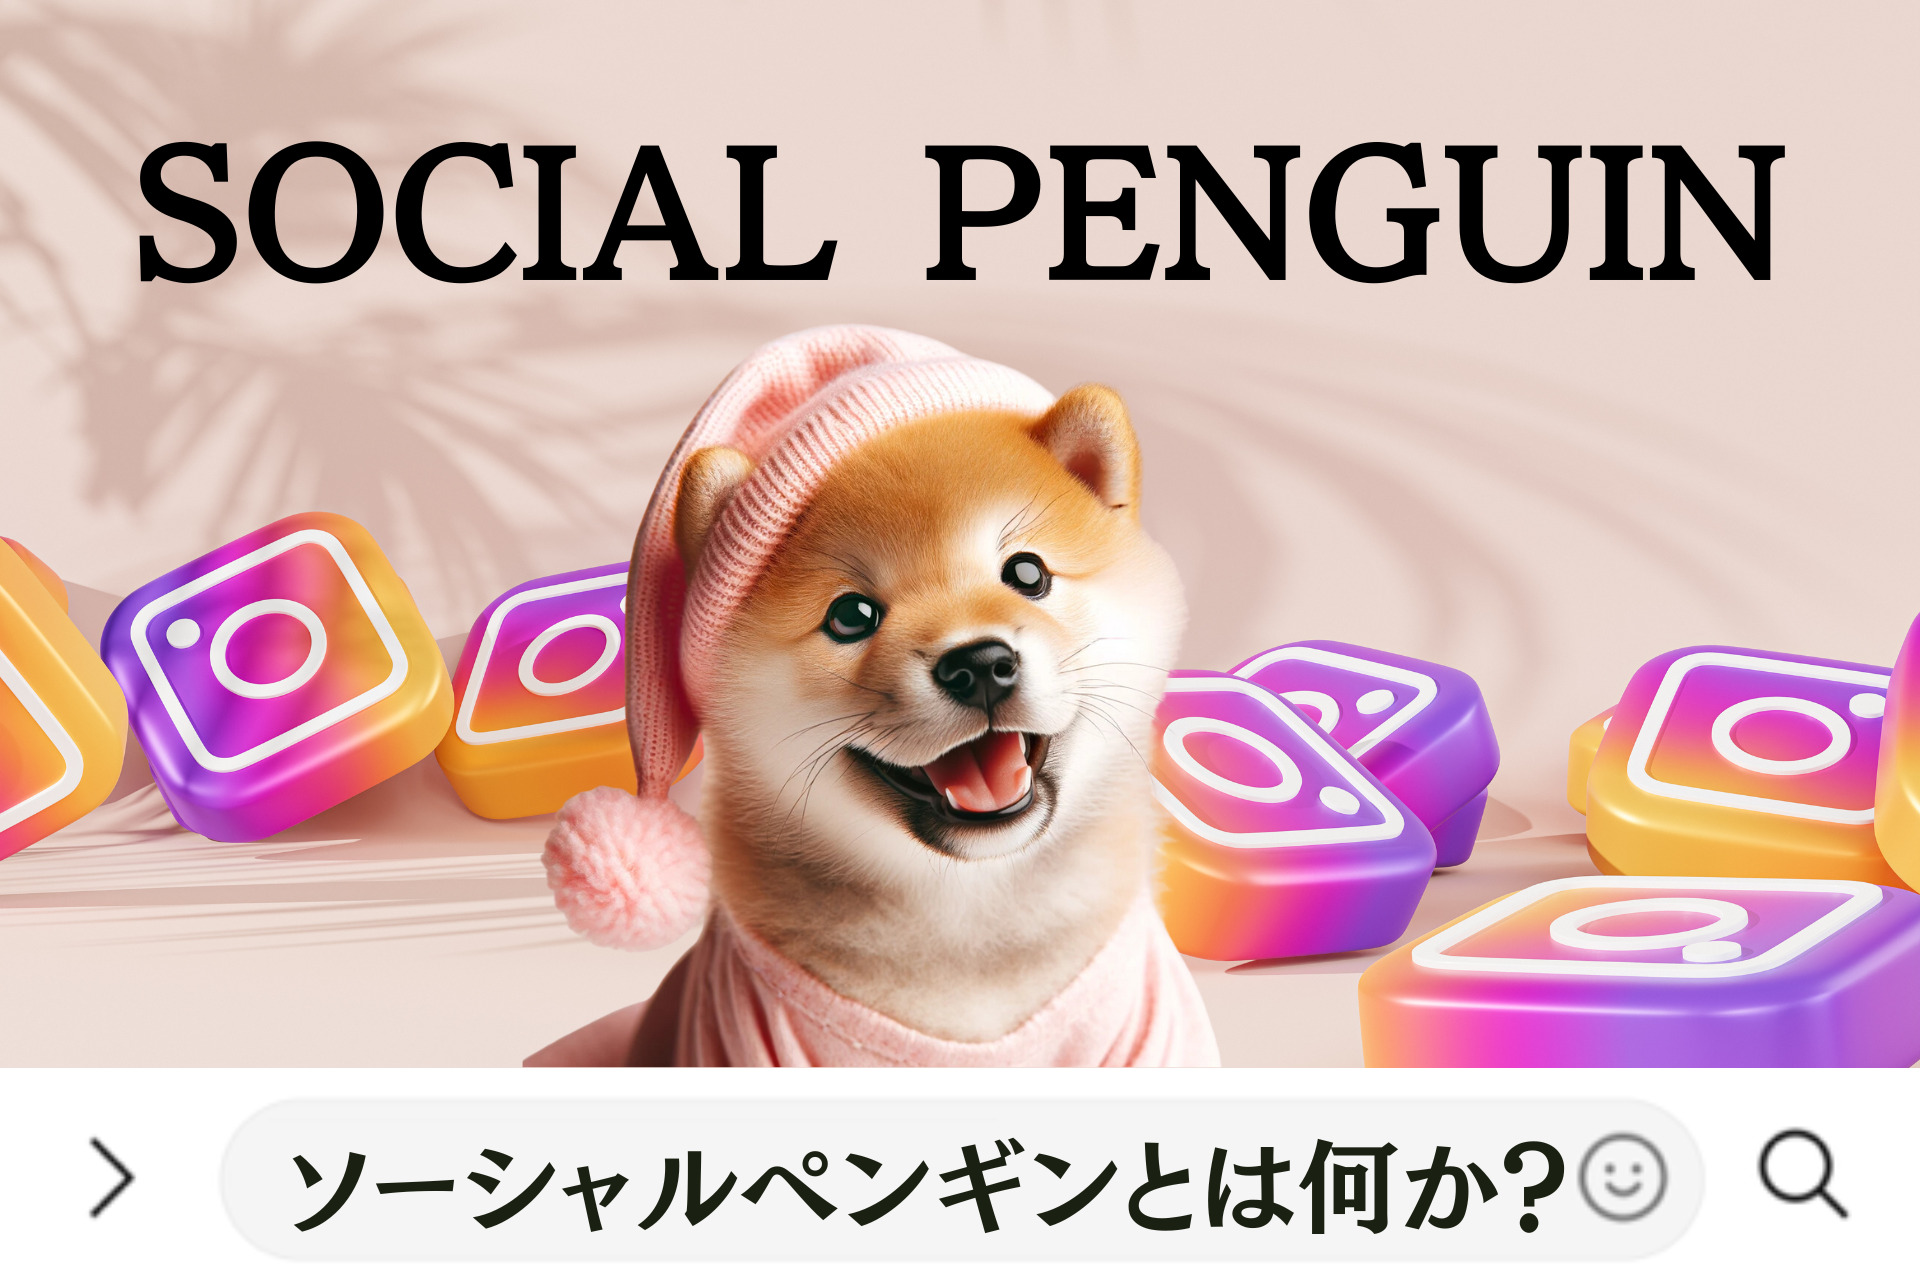 Social Penguin(ソーシャルペンギン)とは？